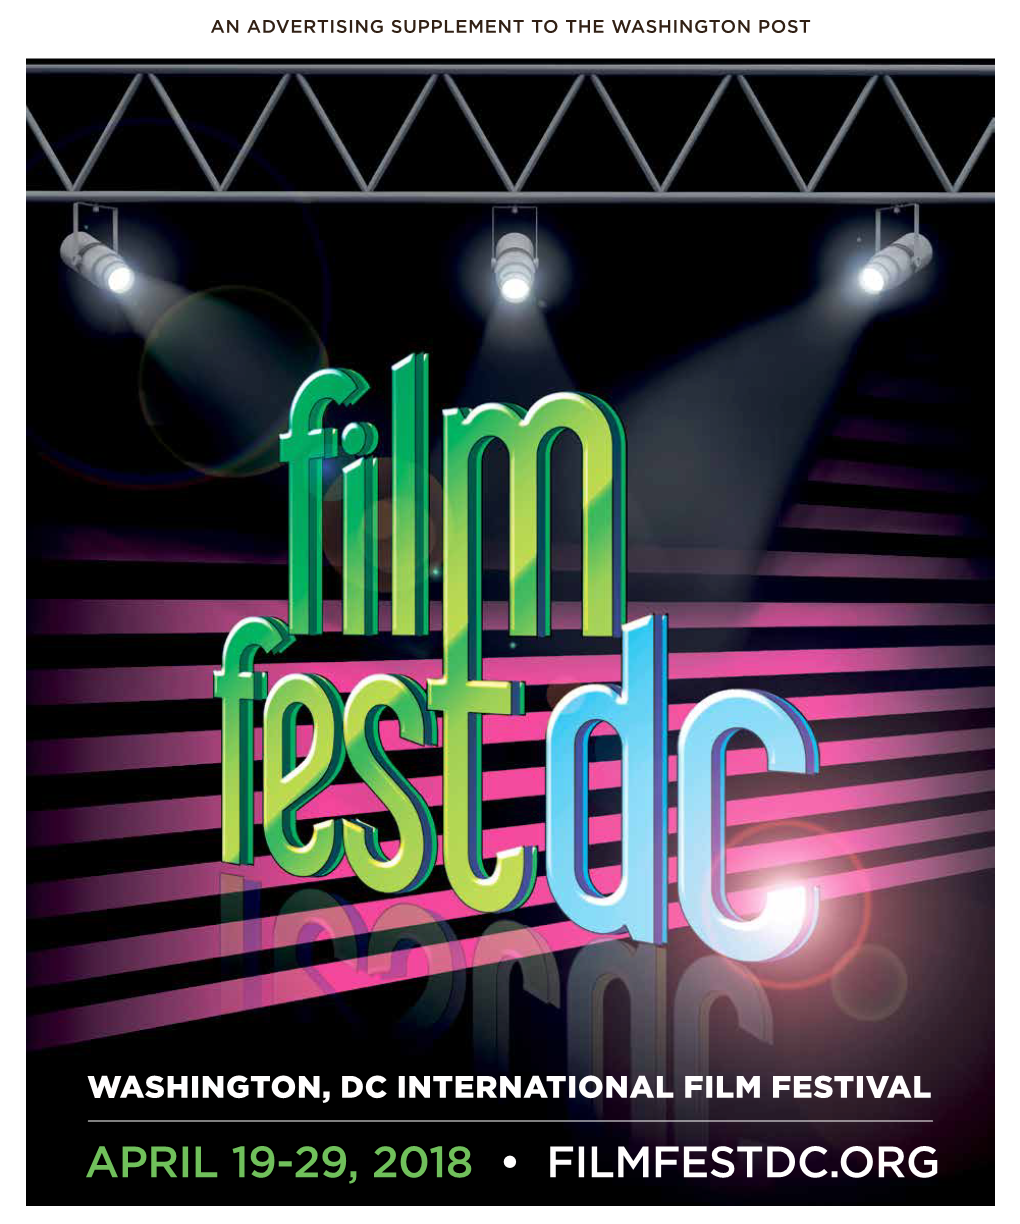 April 19-29, 2018 • Filmfestdc.Org